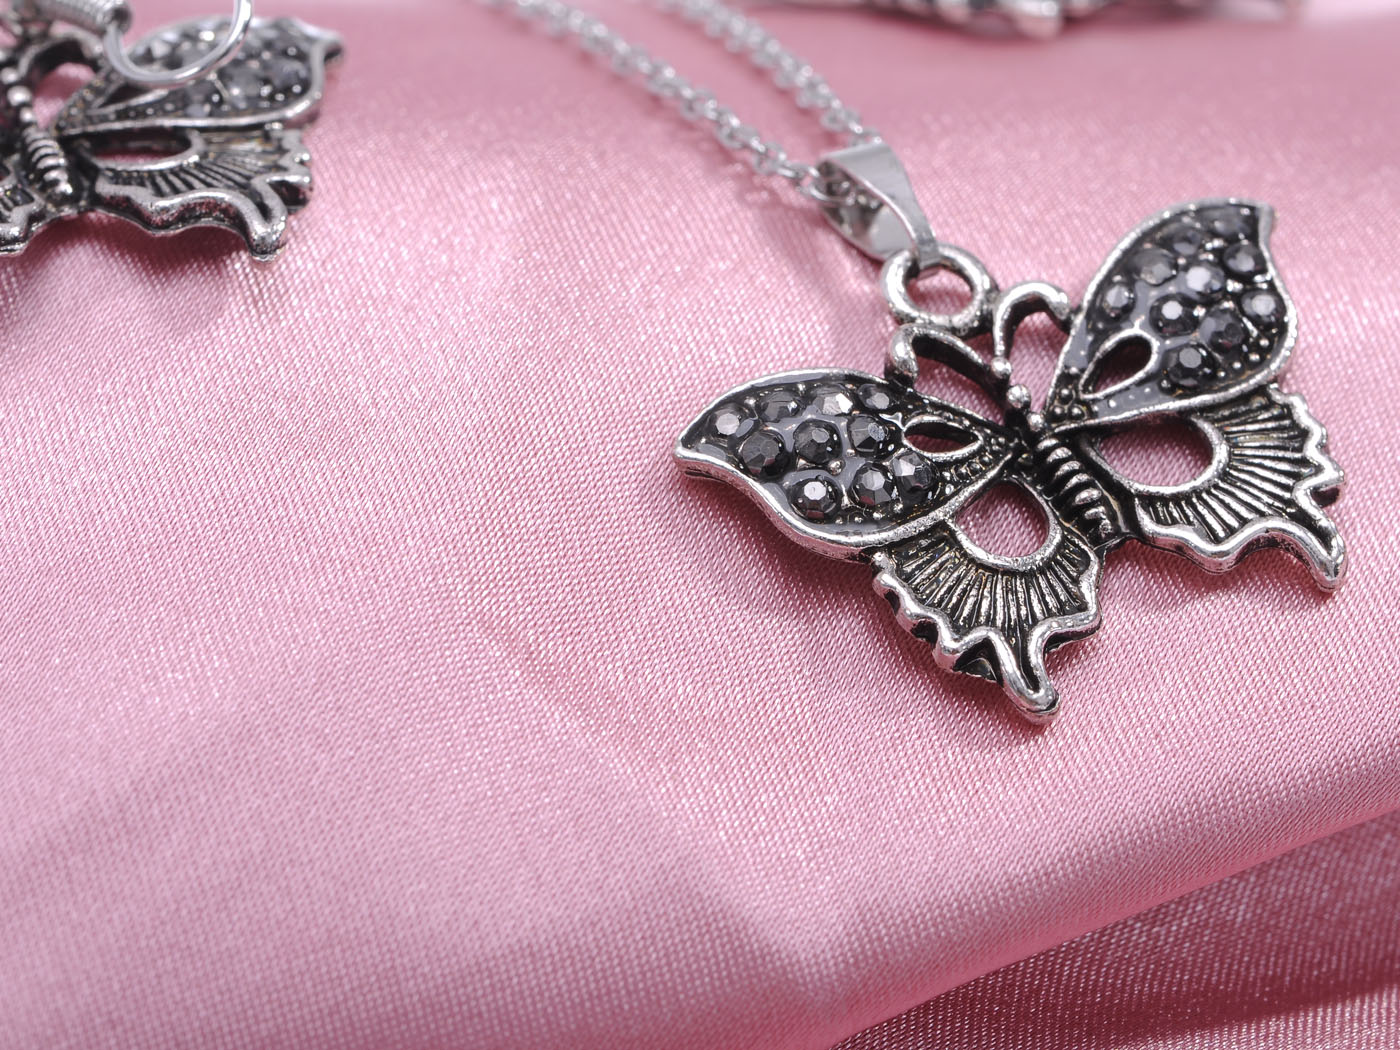 Gun Texture Wings Butterfly Necklace Earring Set